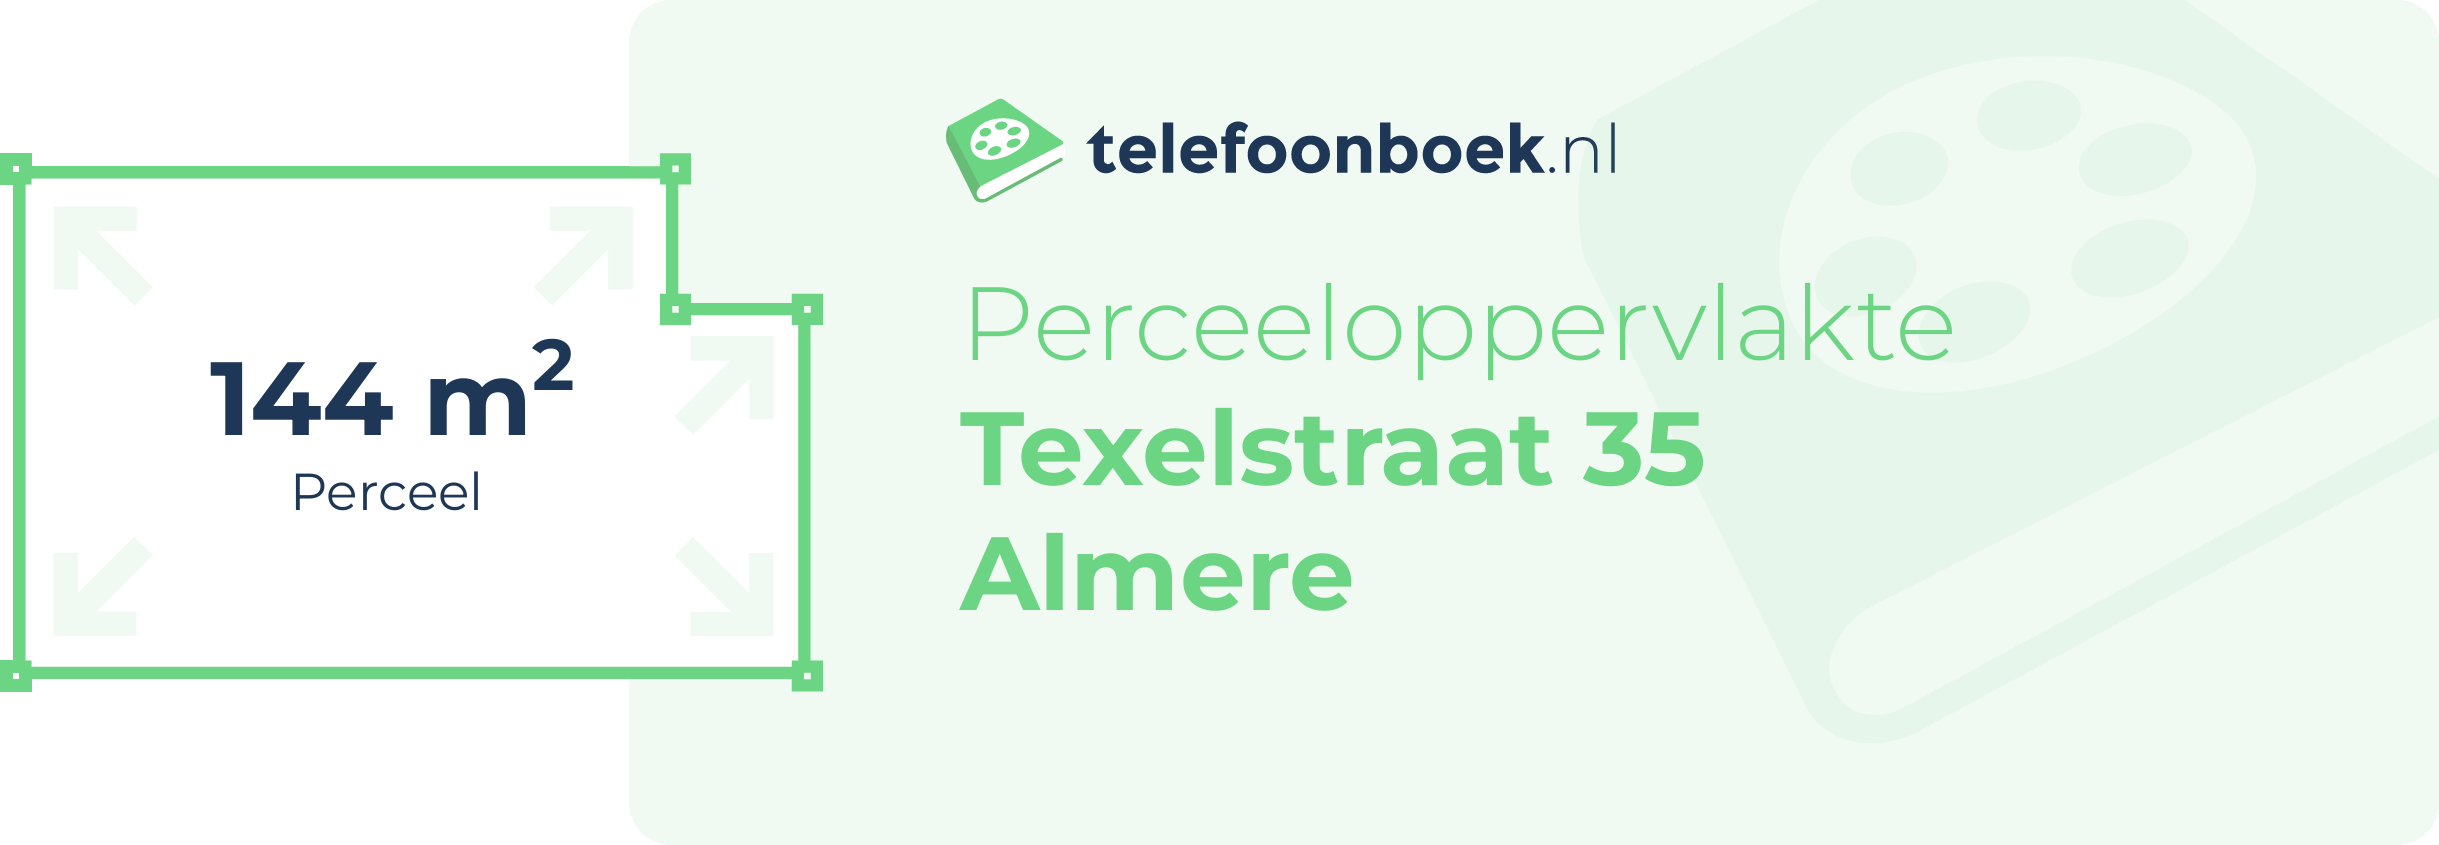 Perceeloppervlakte Texelstraat 35 Almere